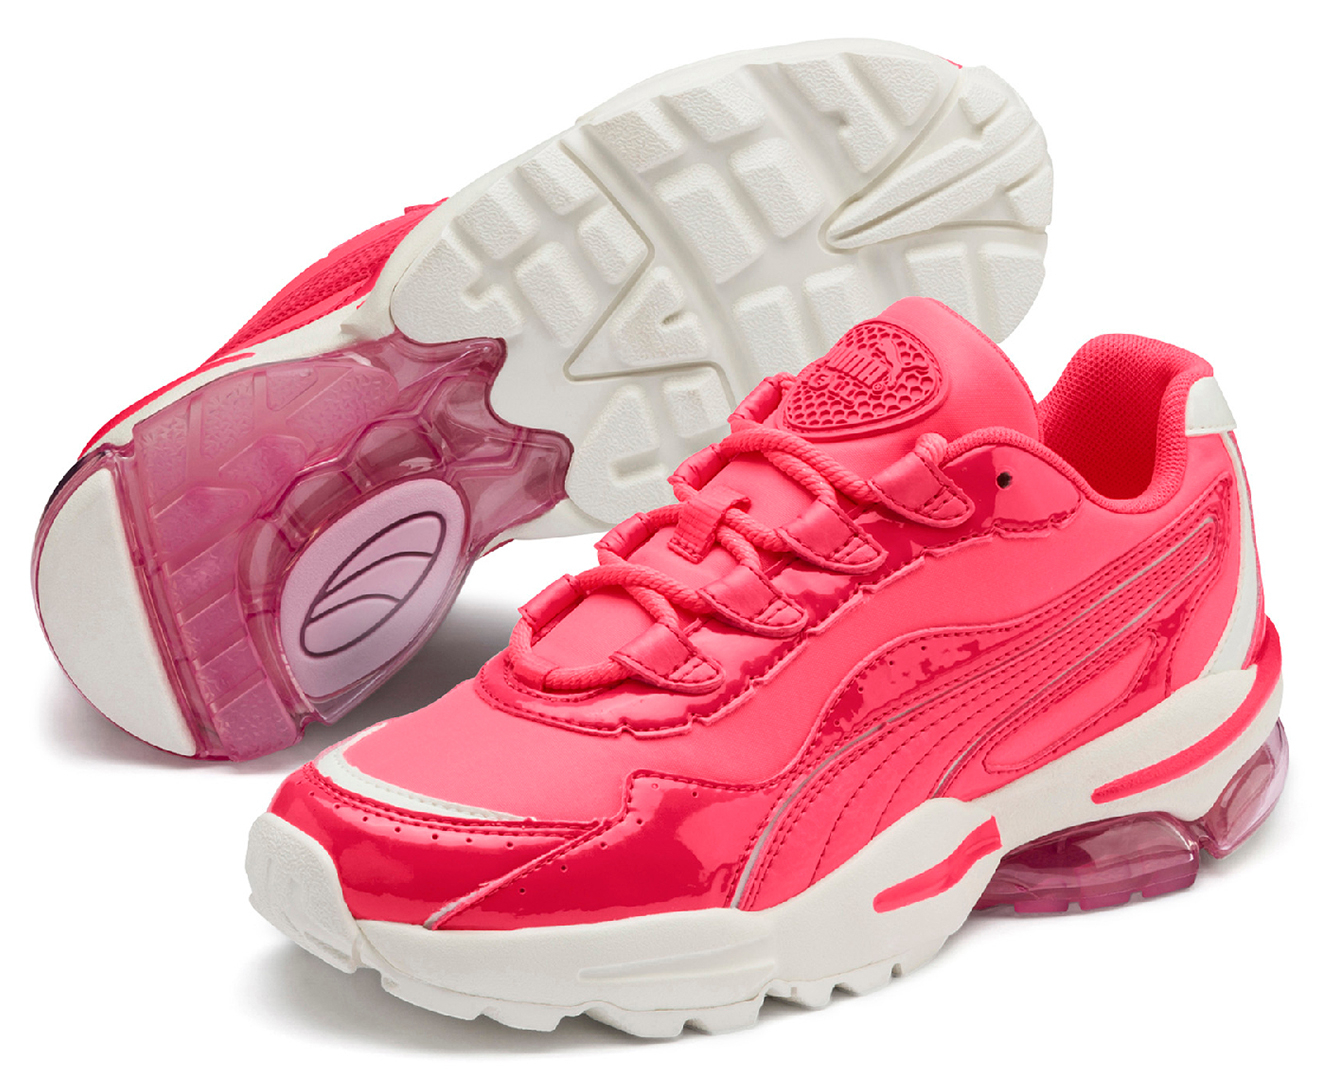 Puma Women's Cell Stellar Neon Sneakers - Pink Alert/Heather | Catch.com.au